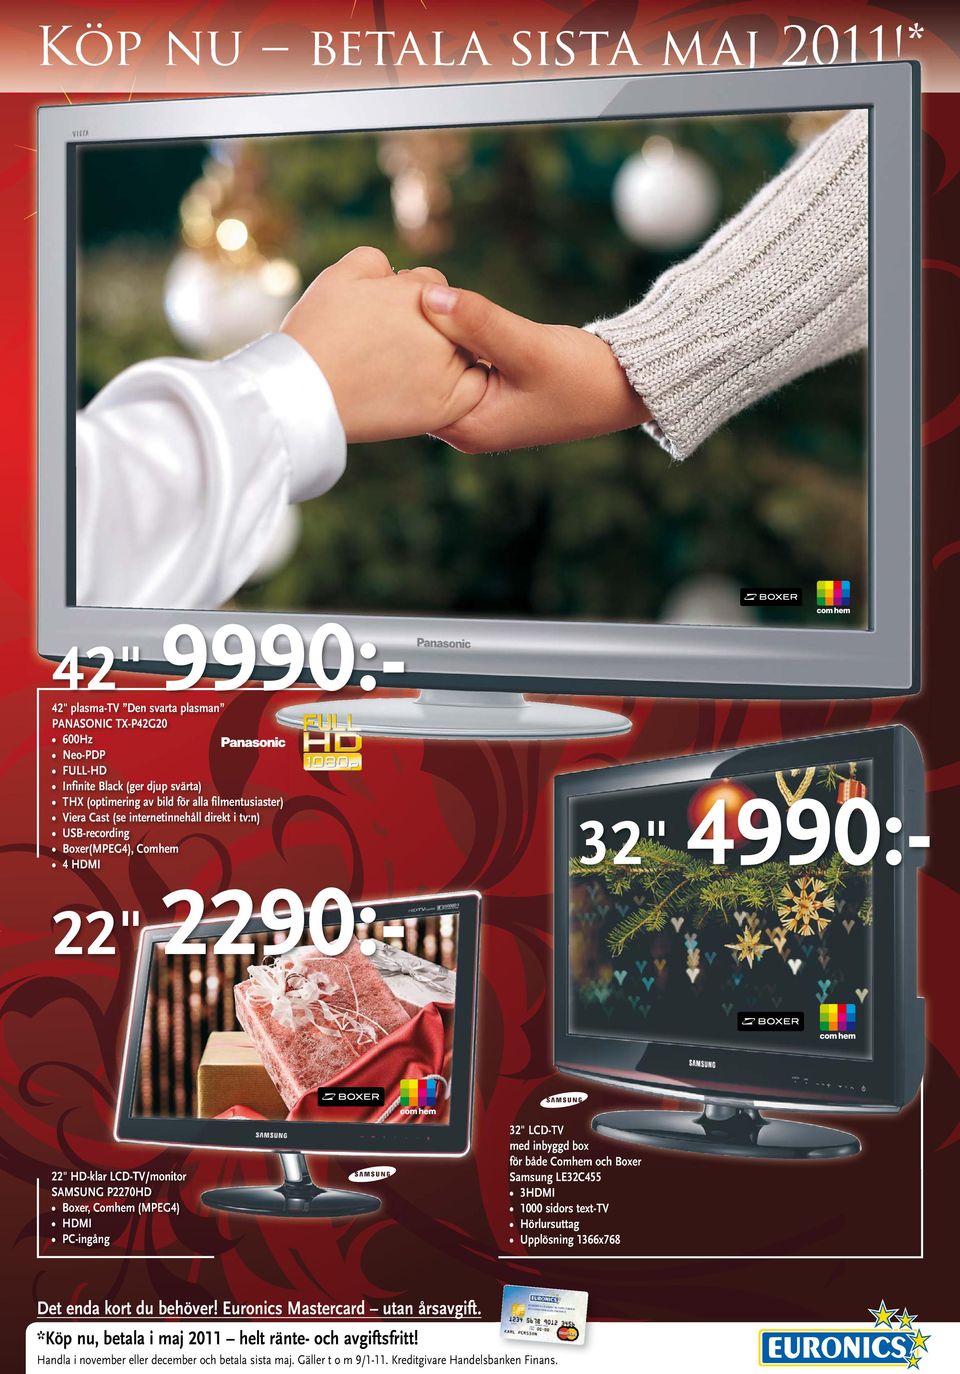 internetinnehåll direkt i tv:n) USB-recording Boxer(MPEG4), Comhem 4 HDMI 32" 4990:- 22" 2290:- 22" HD-klar LCD-TV/monitor SAMSUNG P2270HD Boxer, Comhem (MPEG4) HDMI PC-ingång 32" LCD-TV